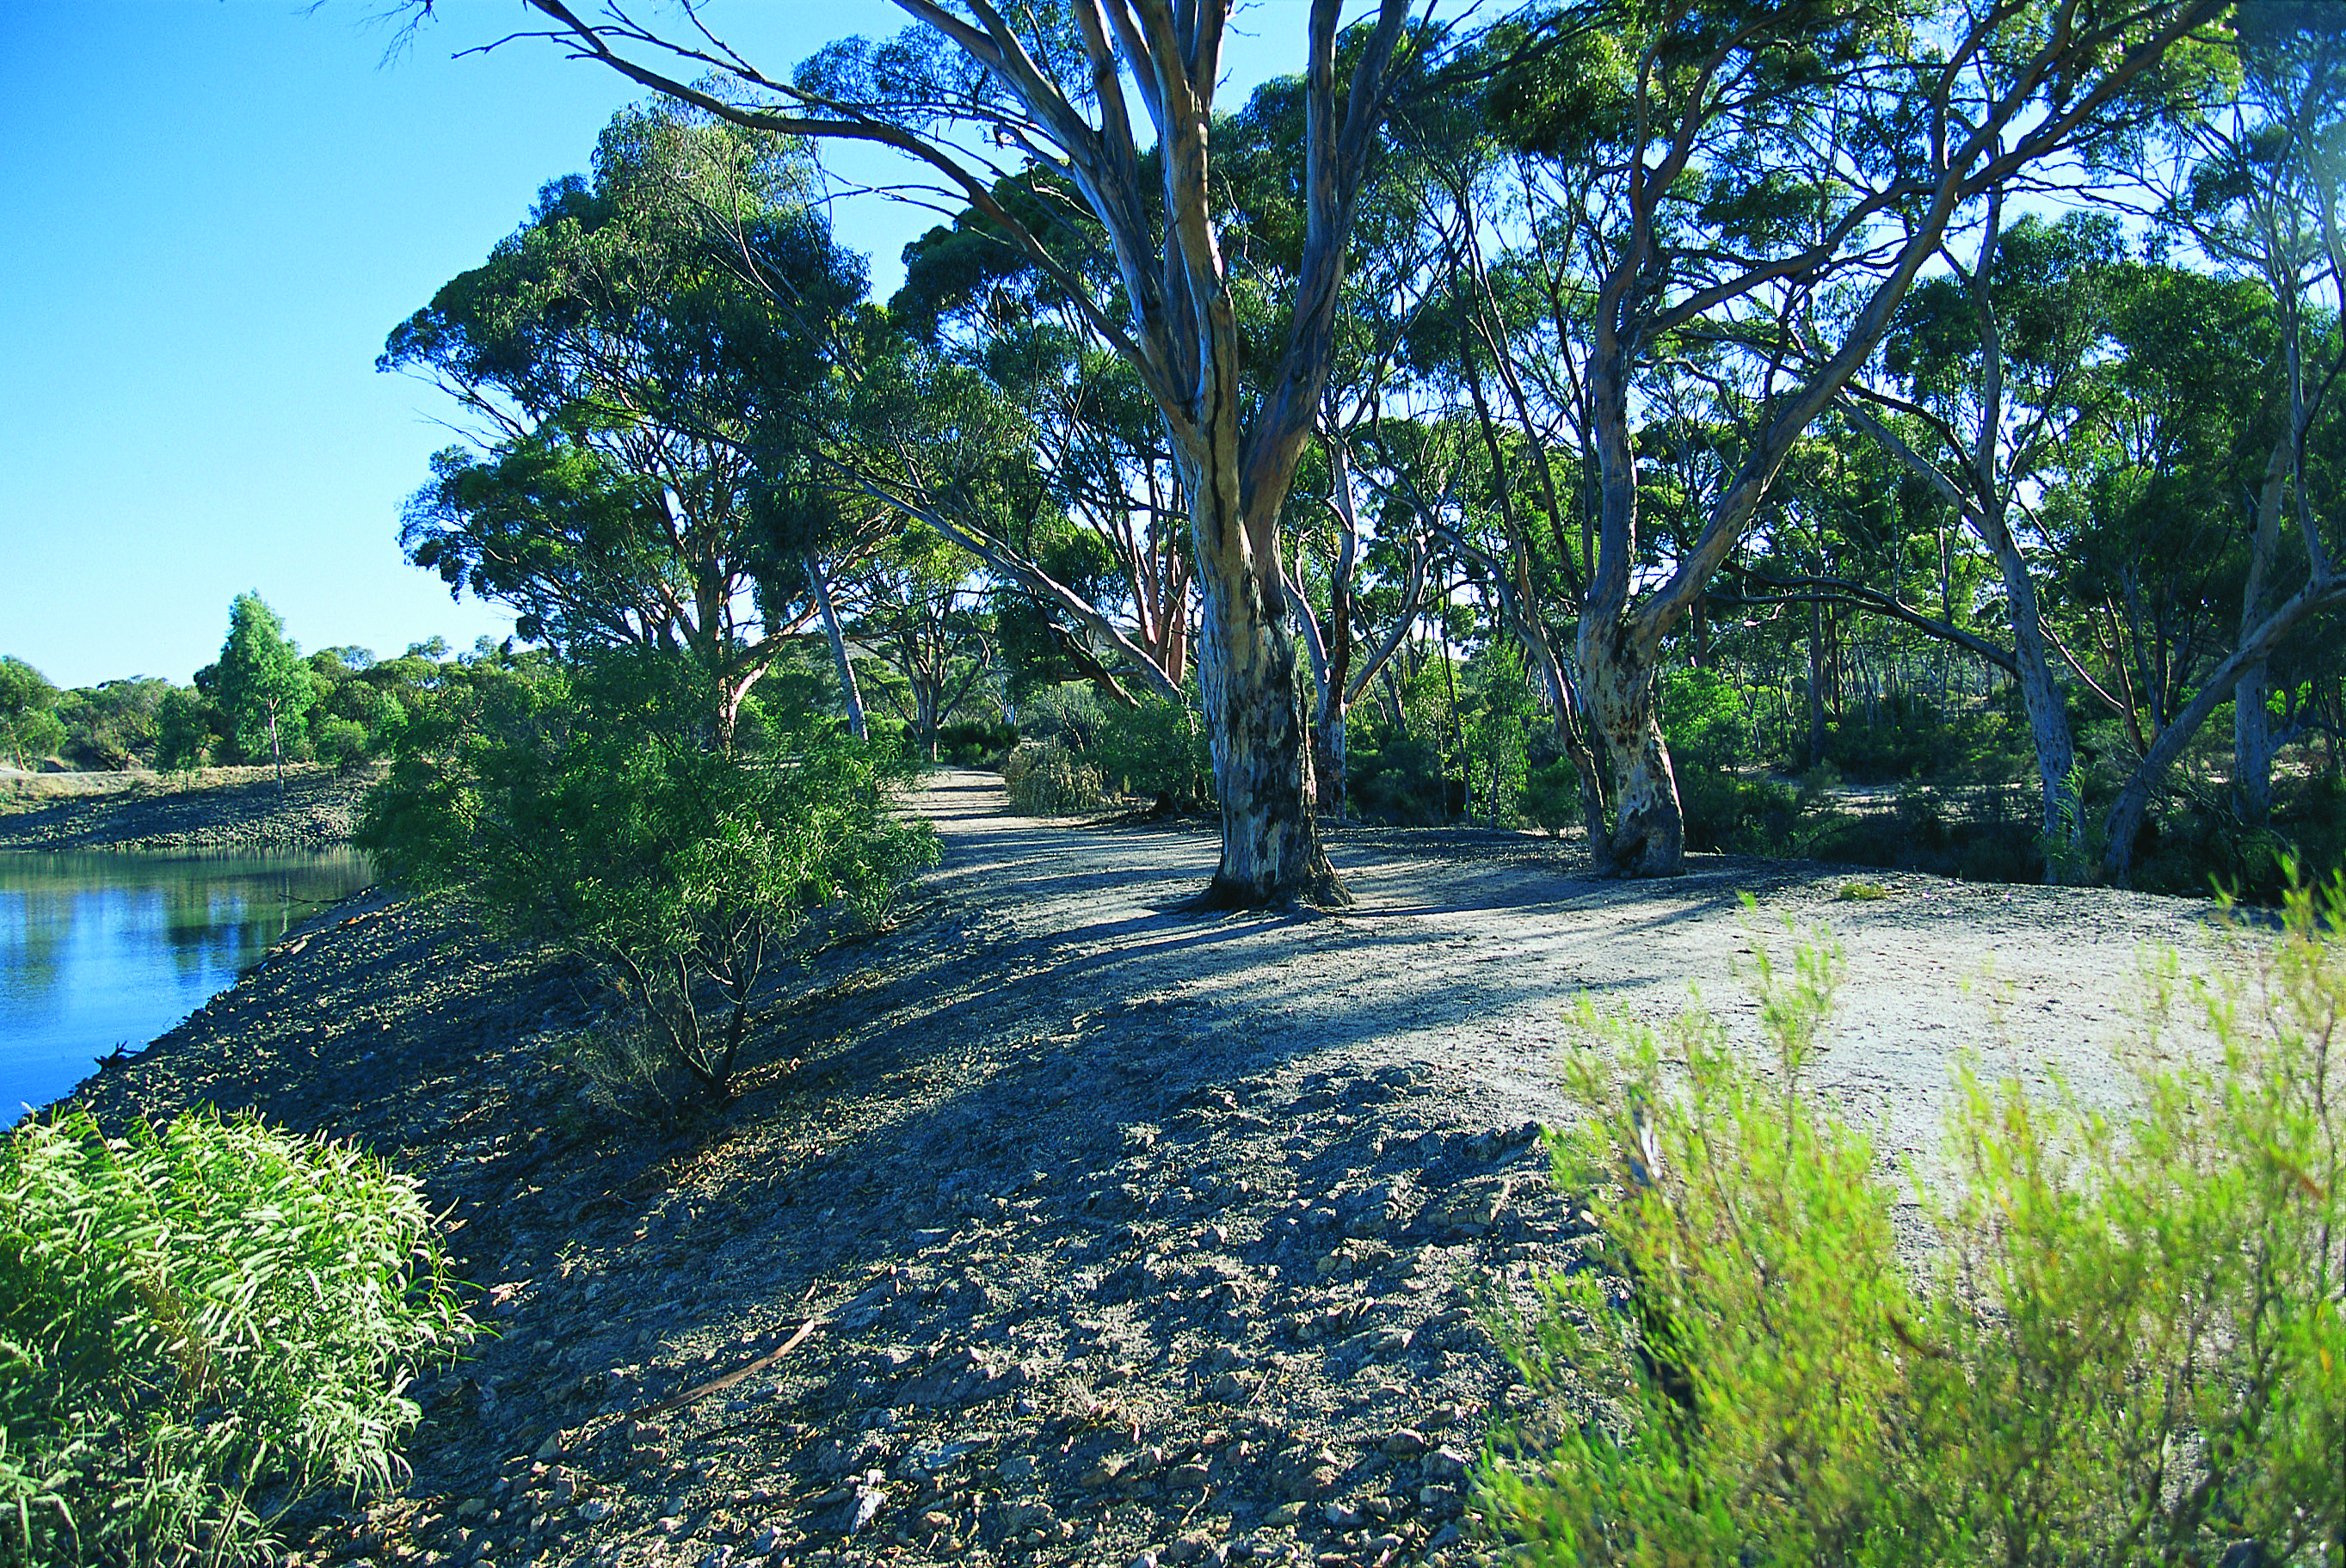 The trees surround the walk trail along the railway dam embankment.